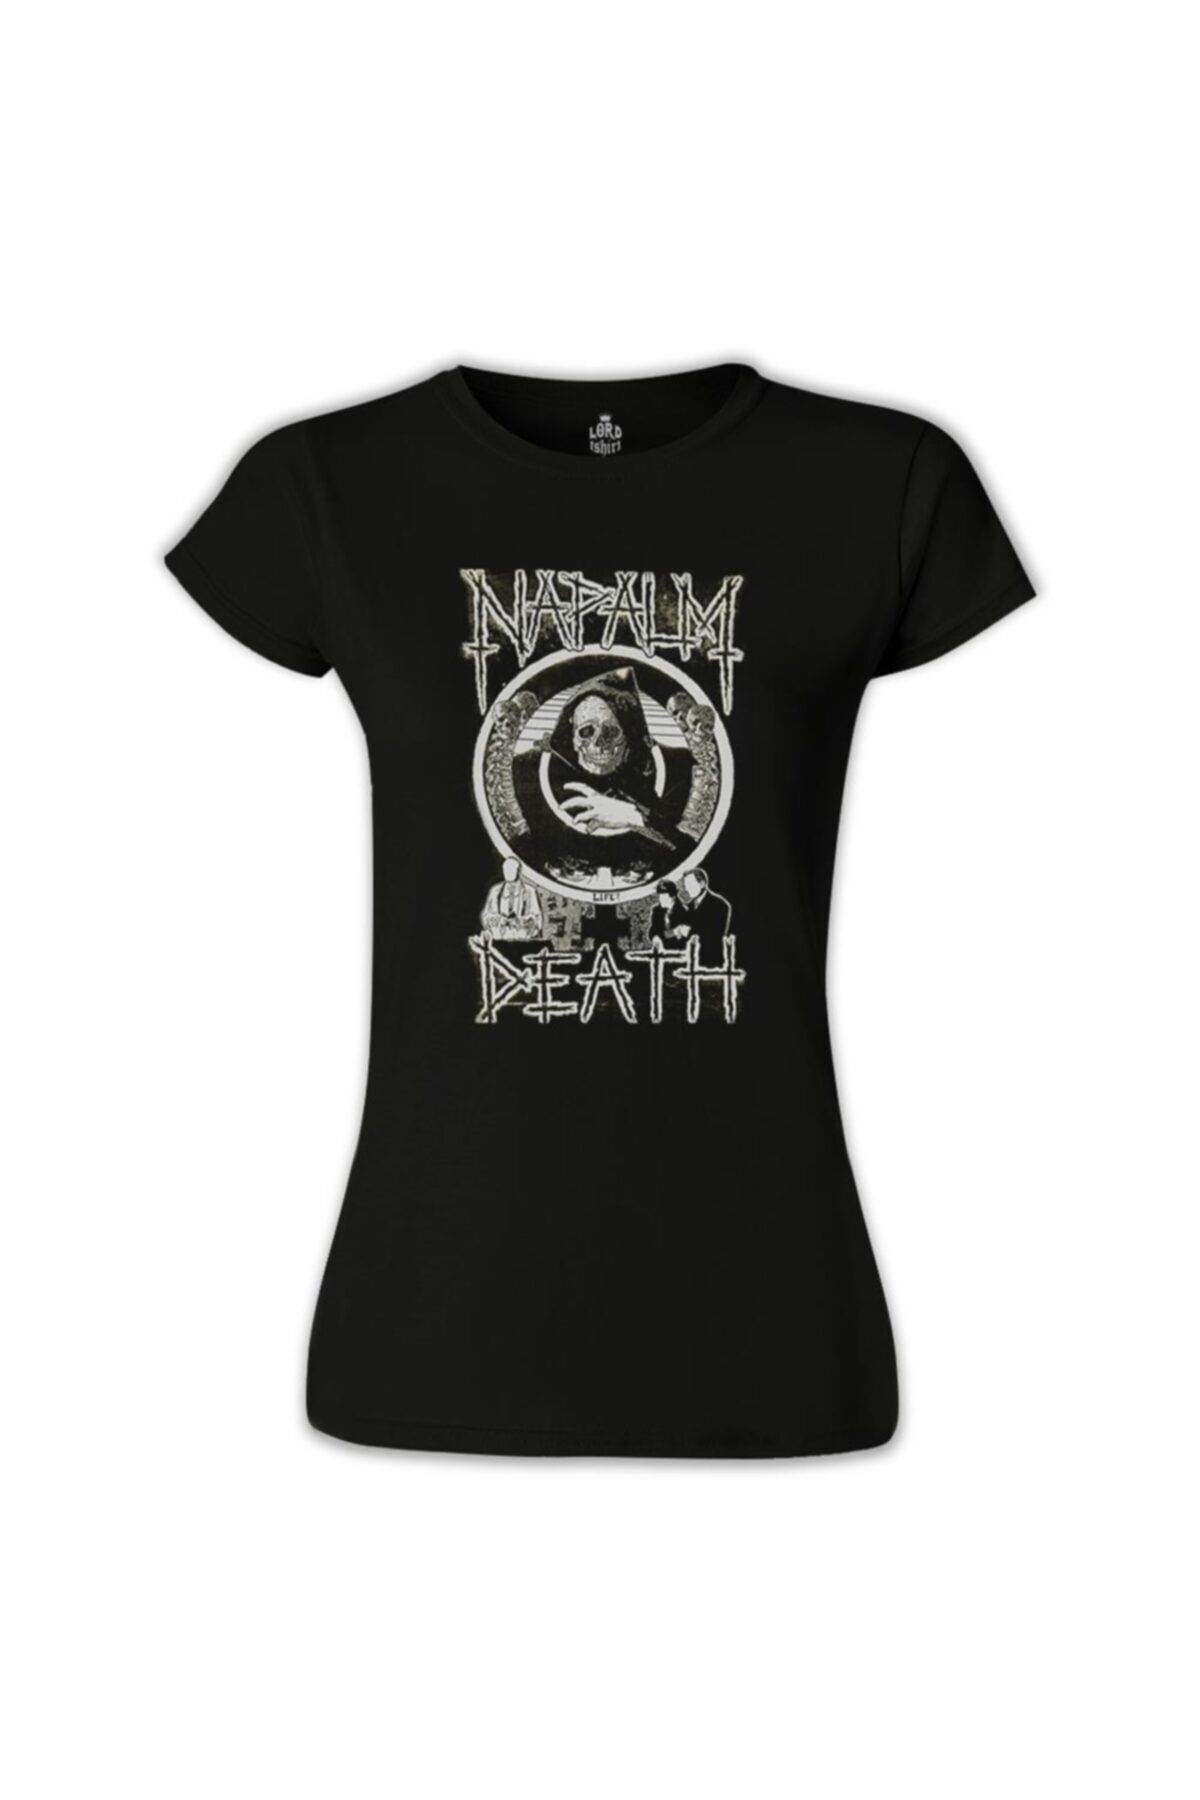 Lord T-Shirt Kadın Siyah Napalm Death - Life Tshirt